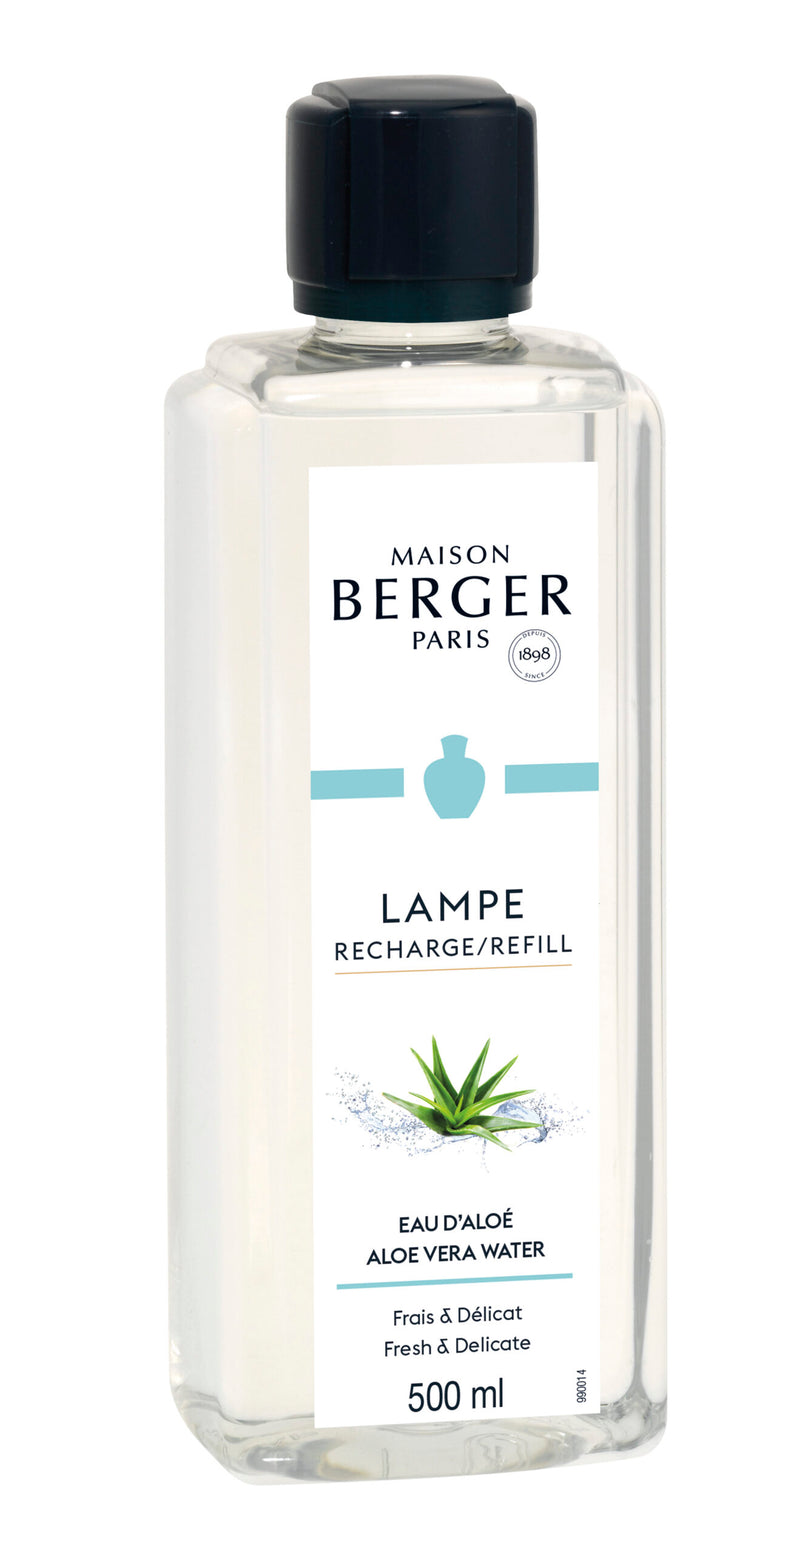 Lampe Berger huisparfum 500 ml - Aloe vera water / Eau d’aloé